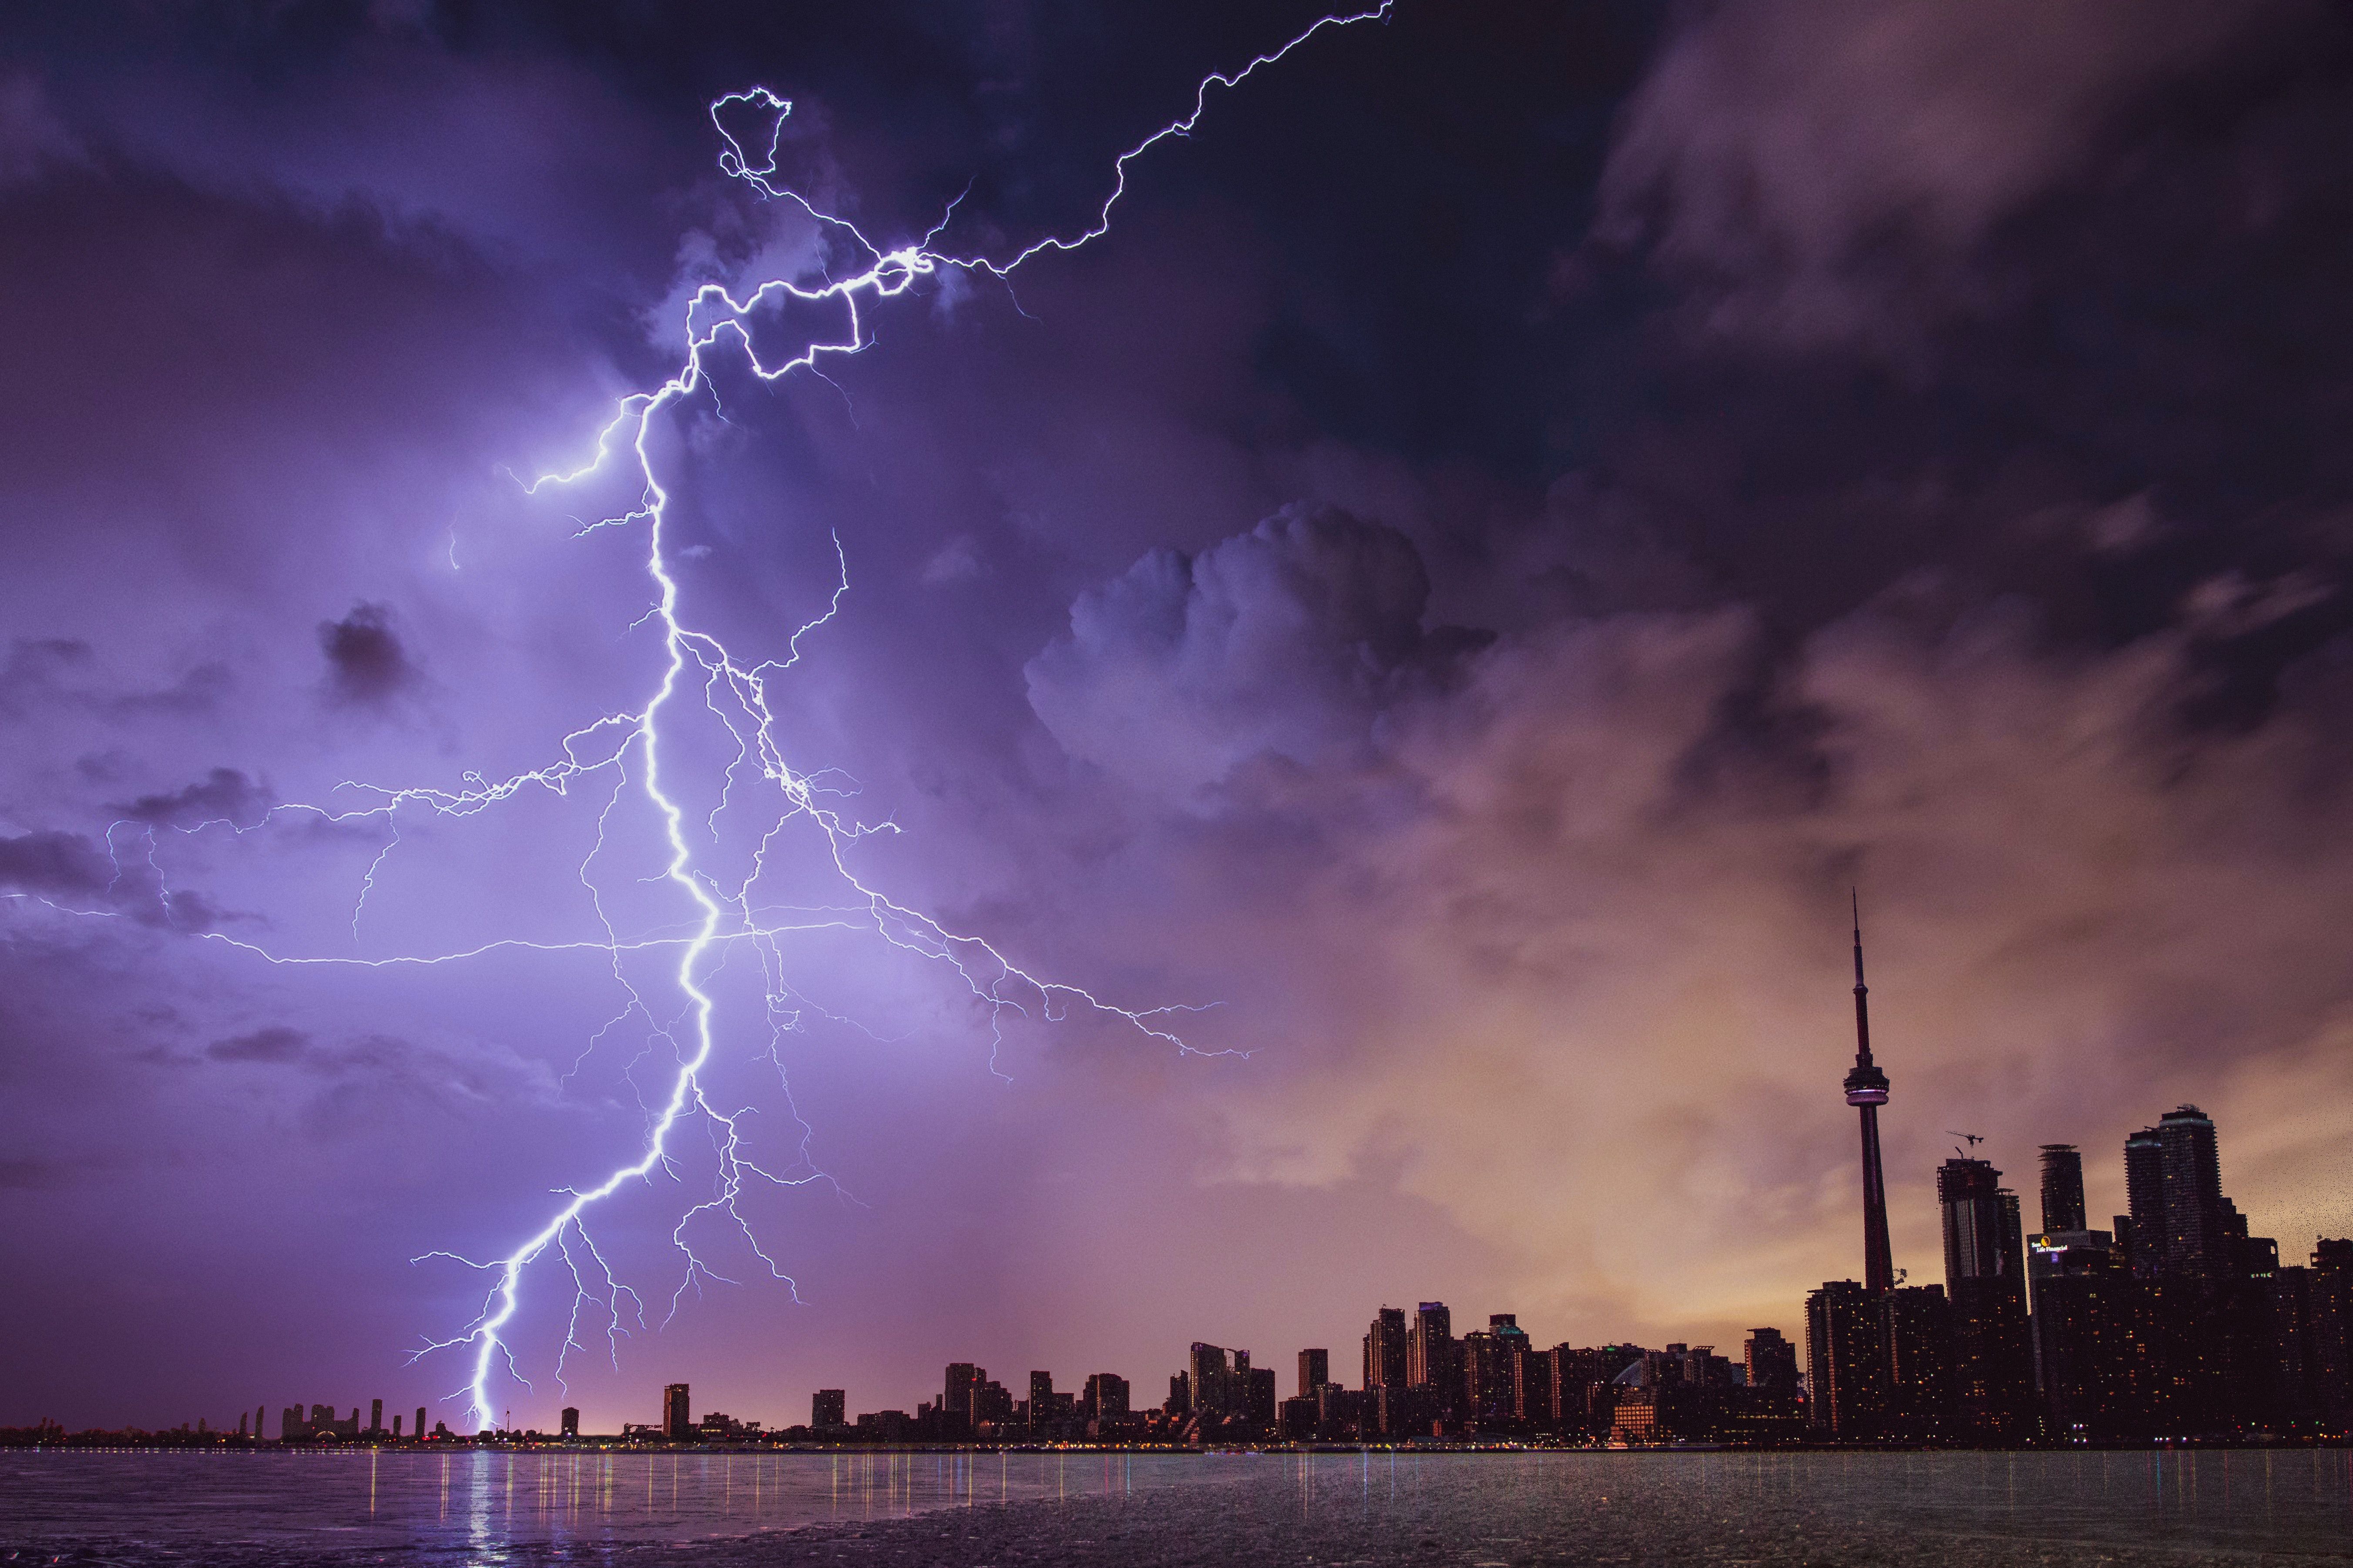 Lightning strikes over the city - Storm